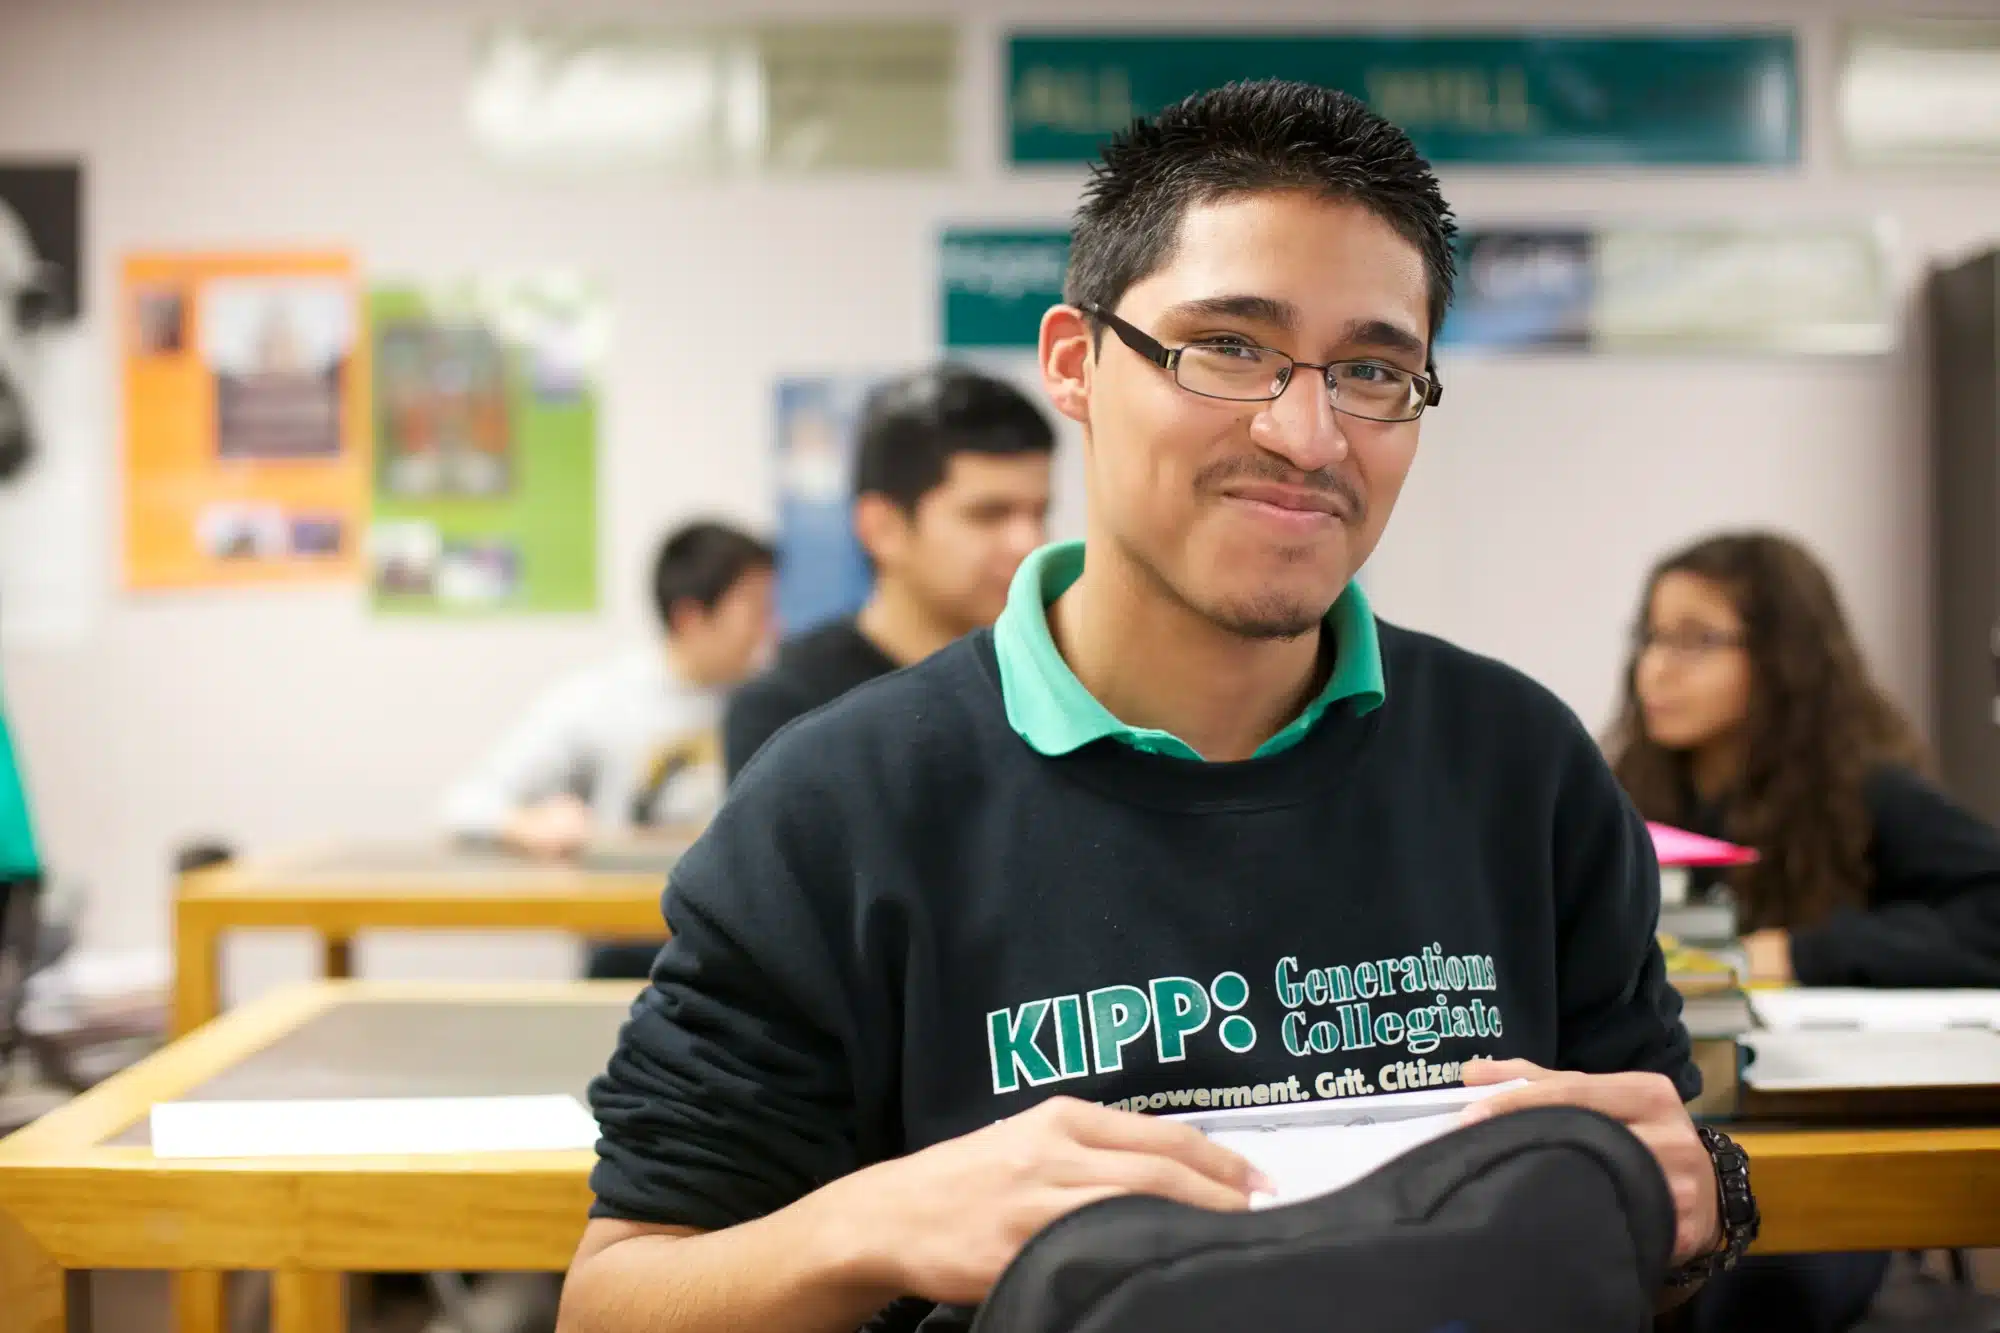 KIPP Generations Collegiate KIPP Texas